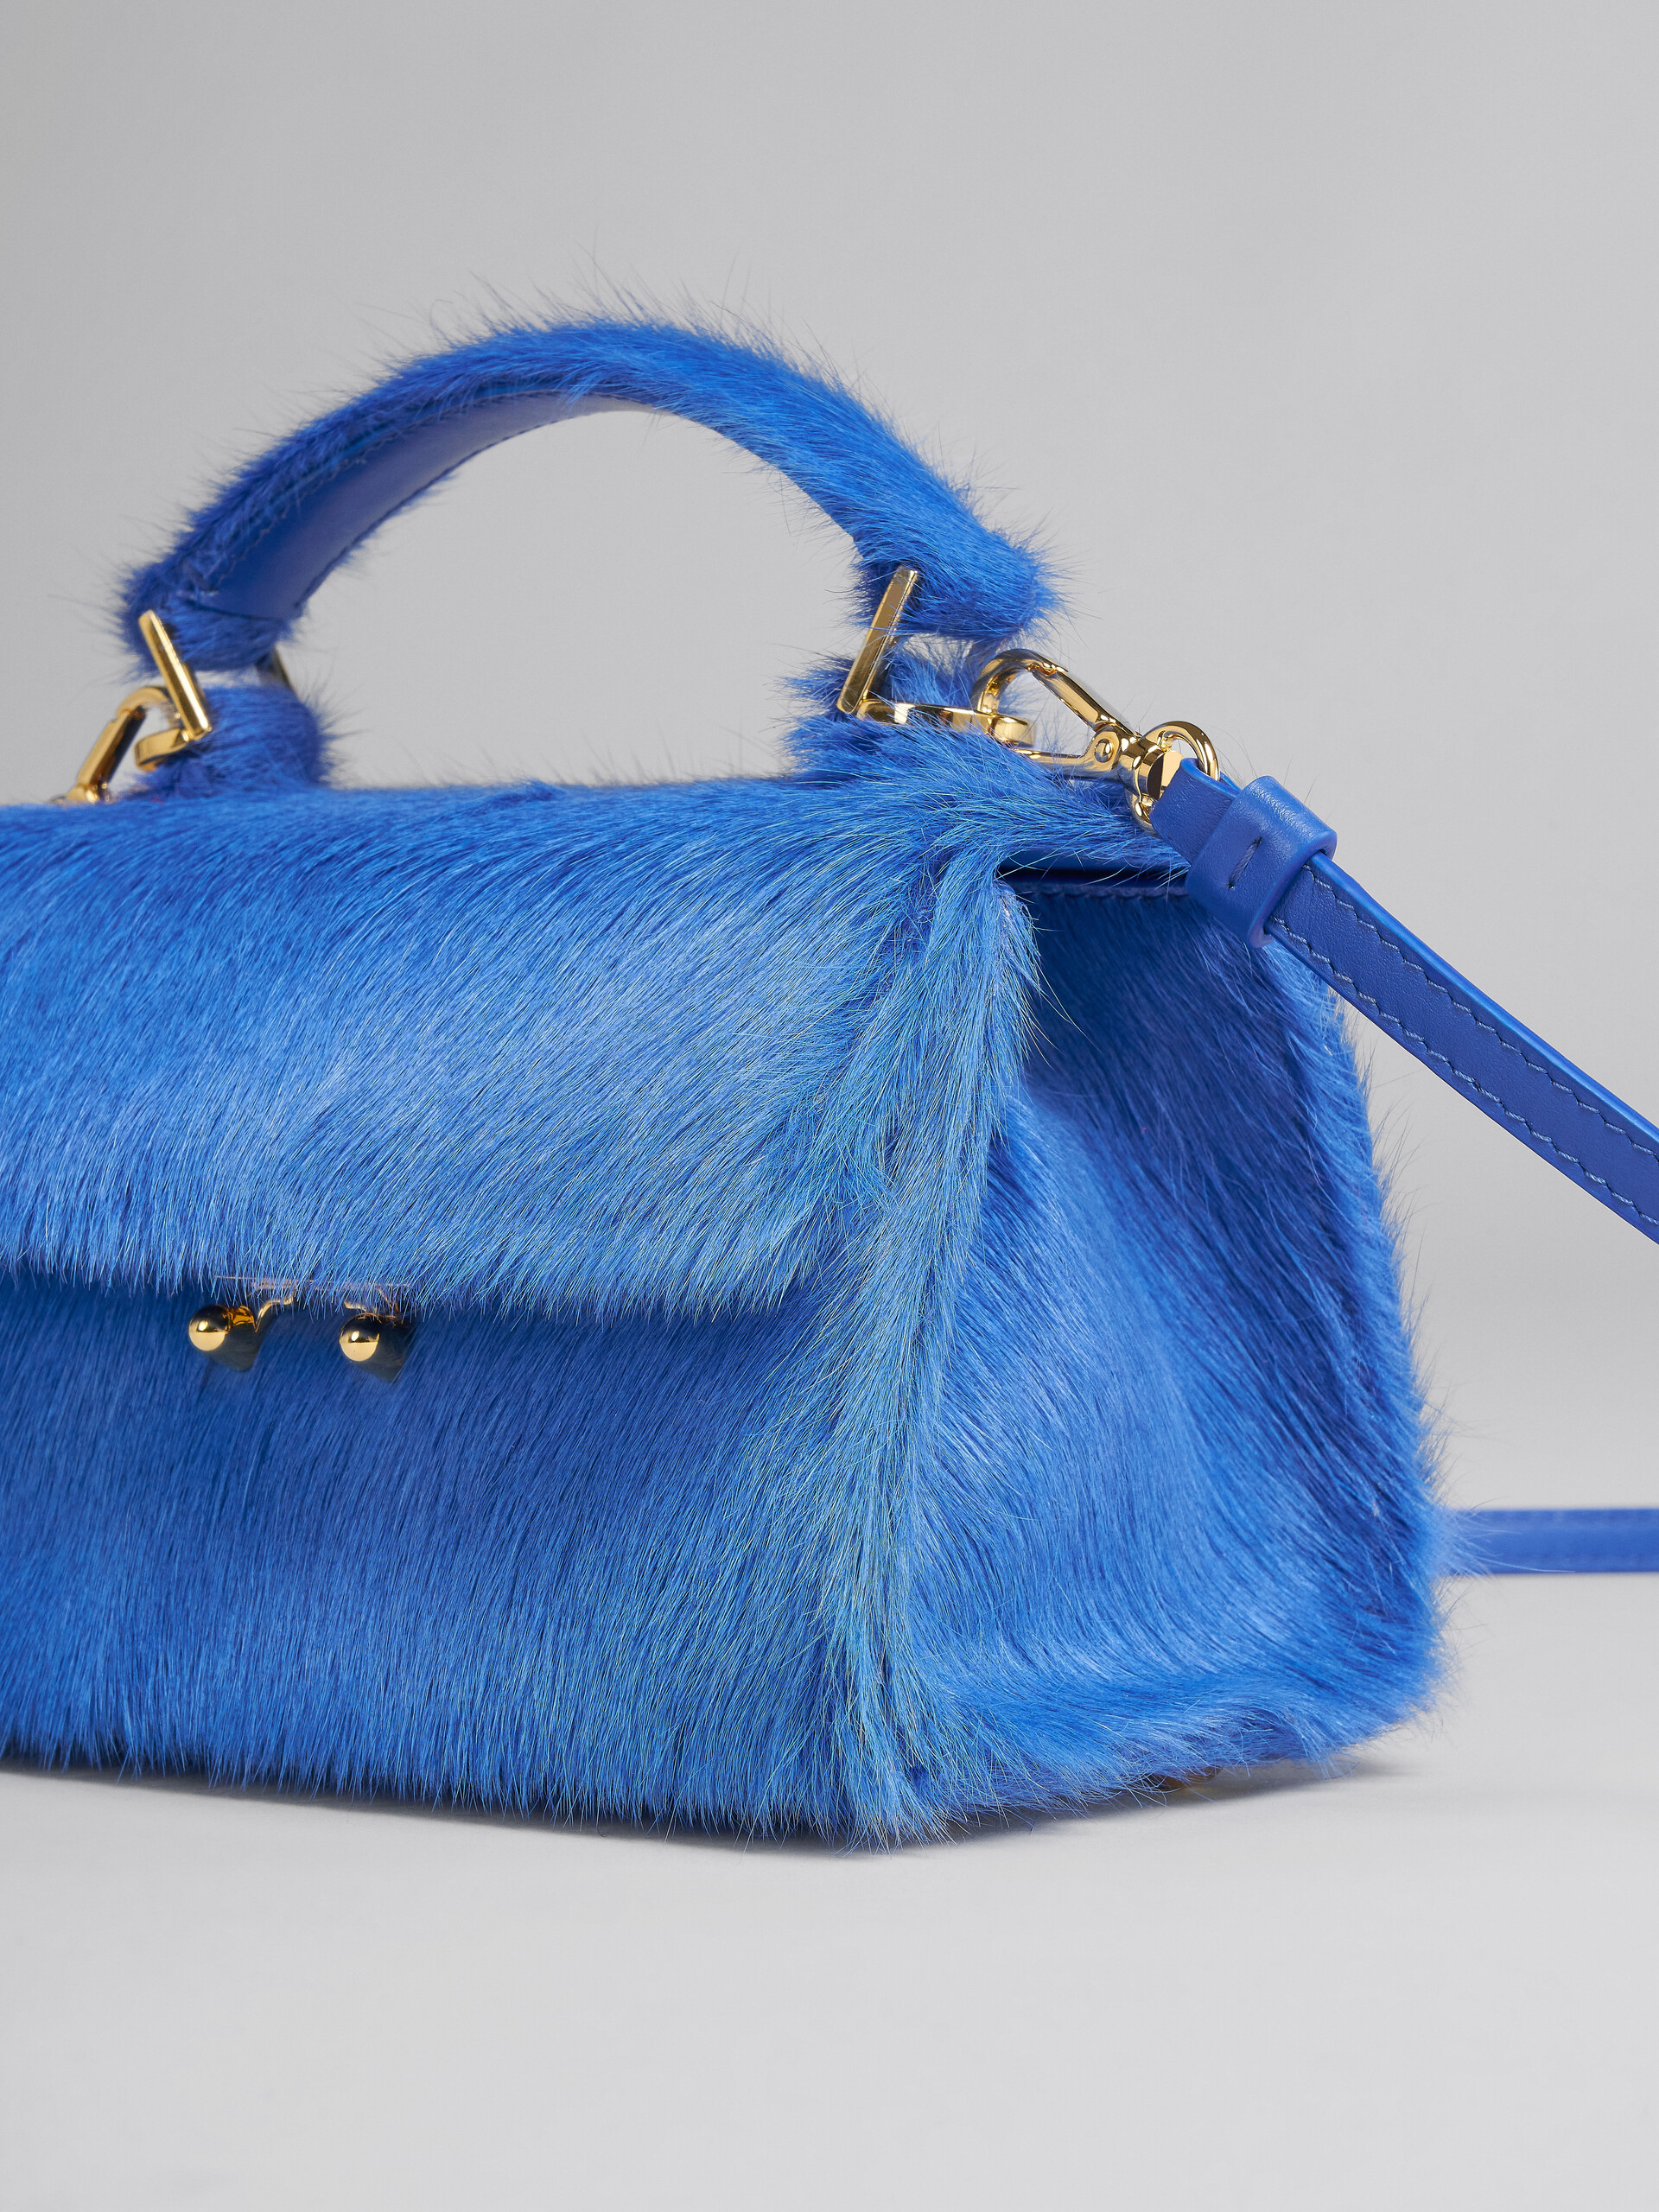 Relativity Mini Bag in blue long hair calfskin - Handbags - Image 5